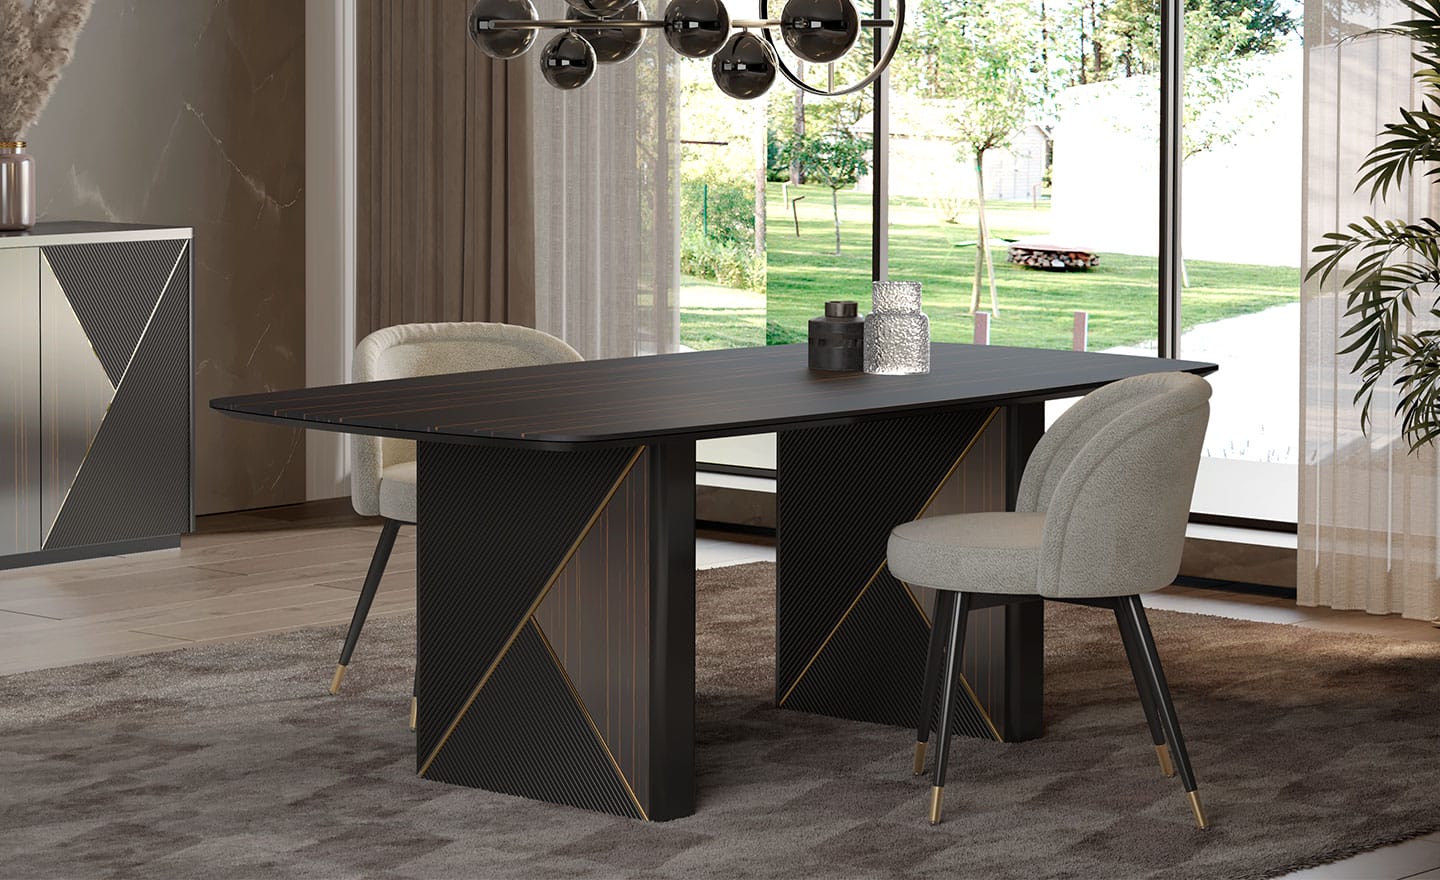 Mesa de Jantar Ebano Alma - Design Moderno e Elegante | Moveistore